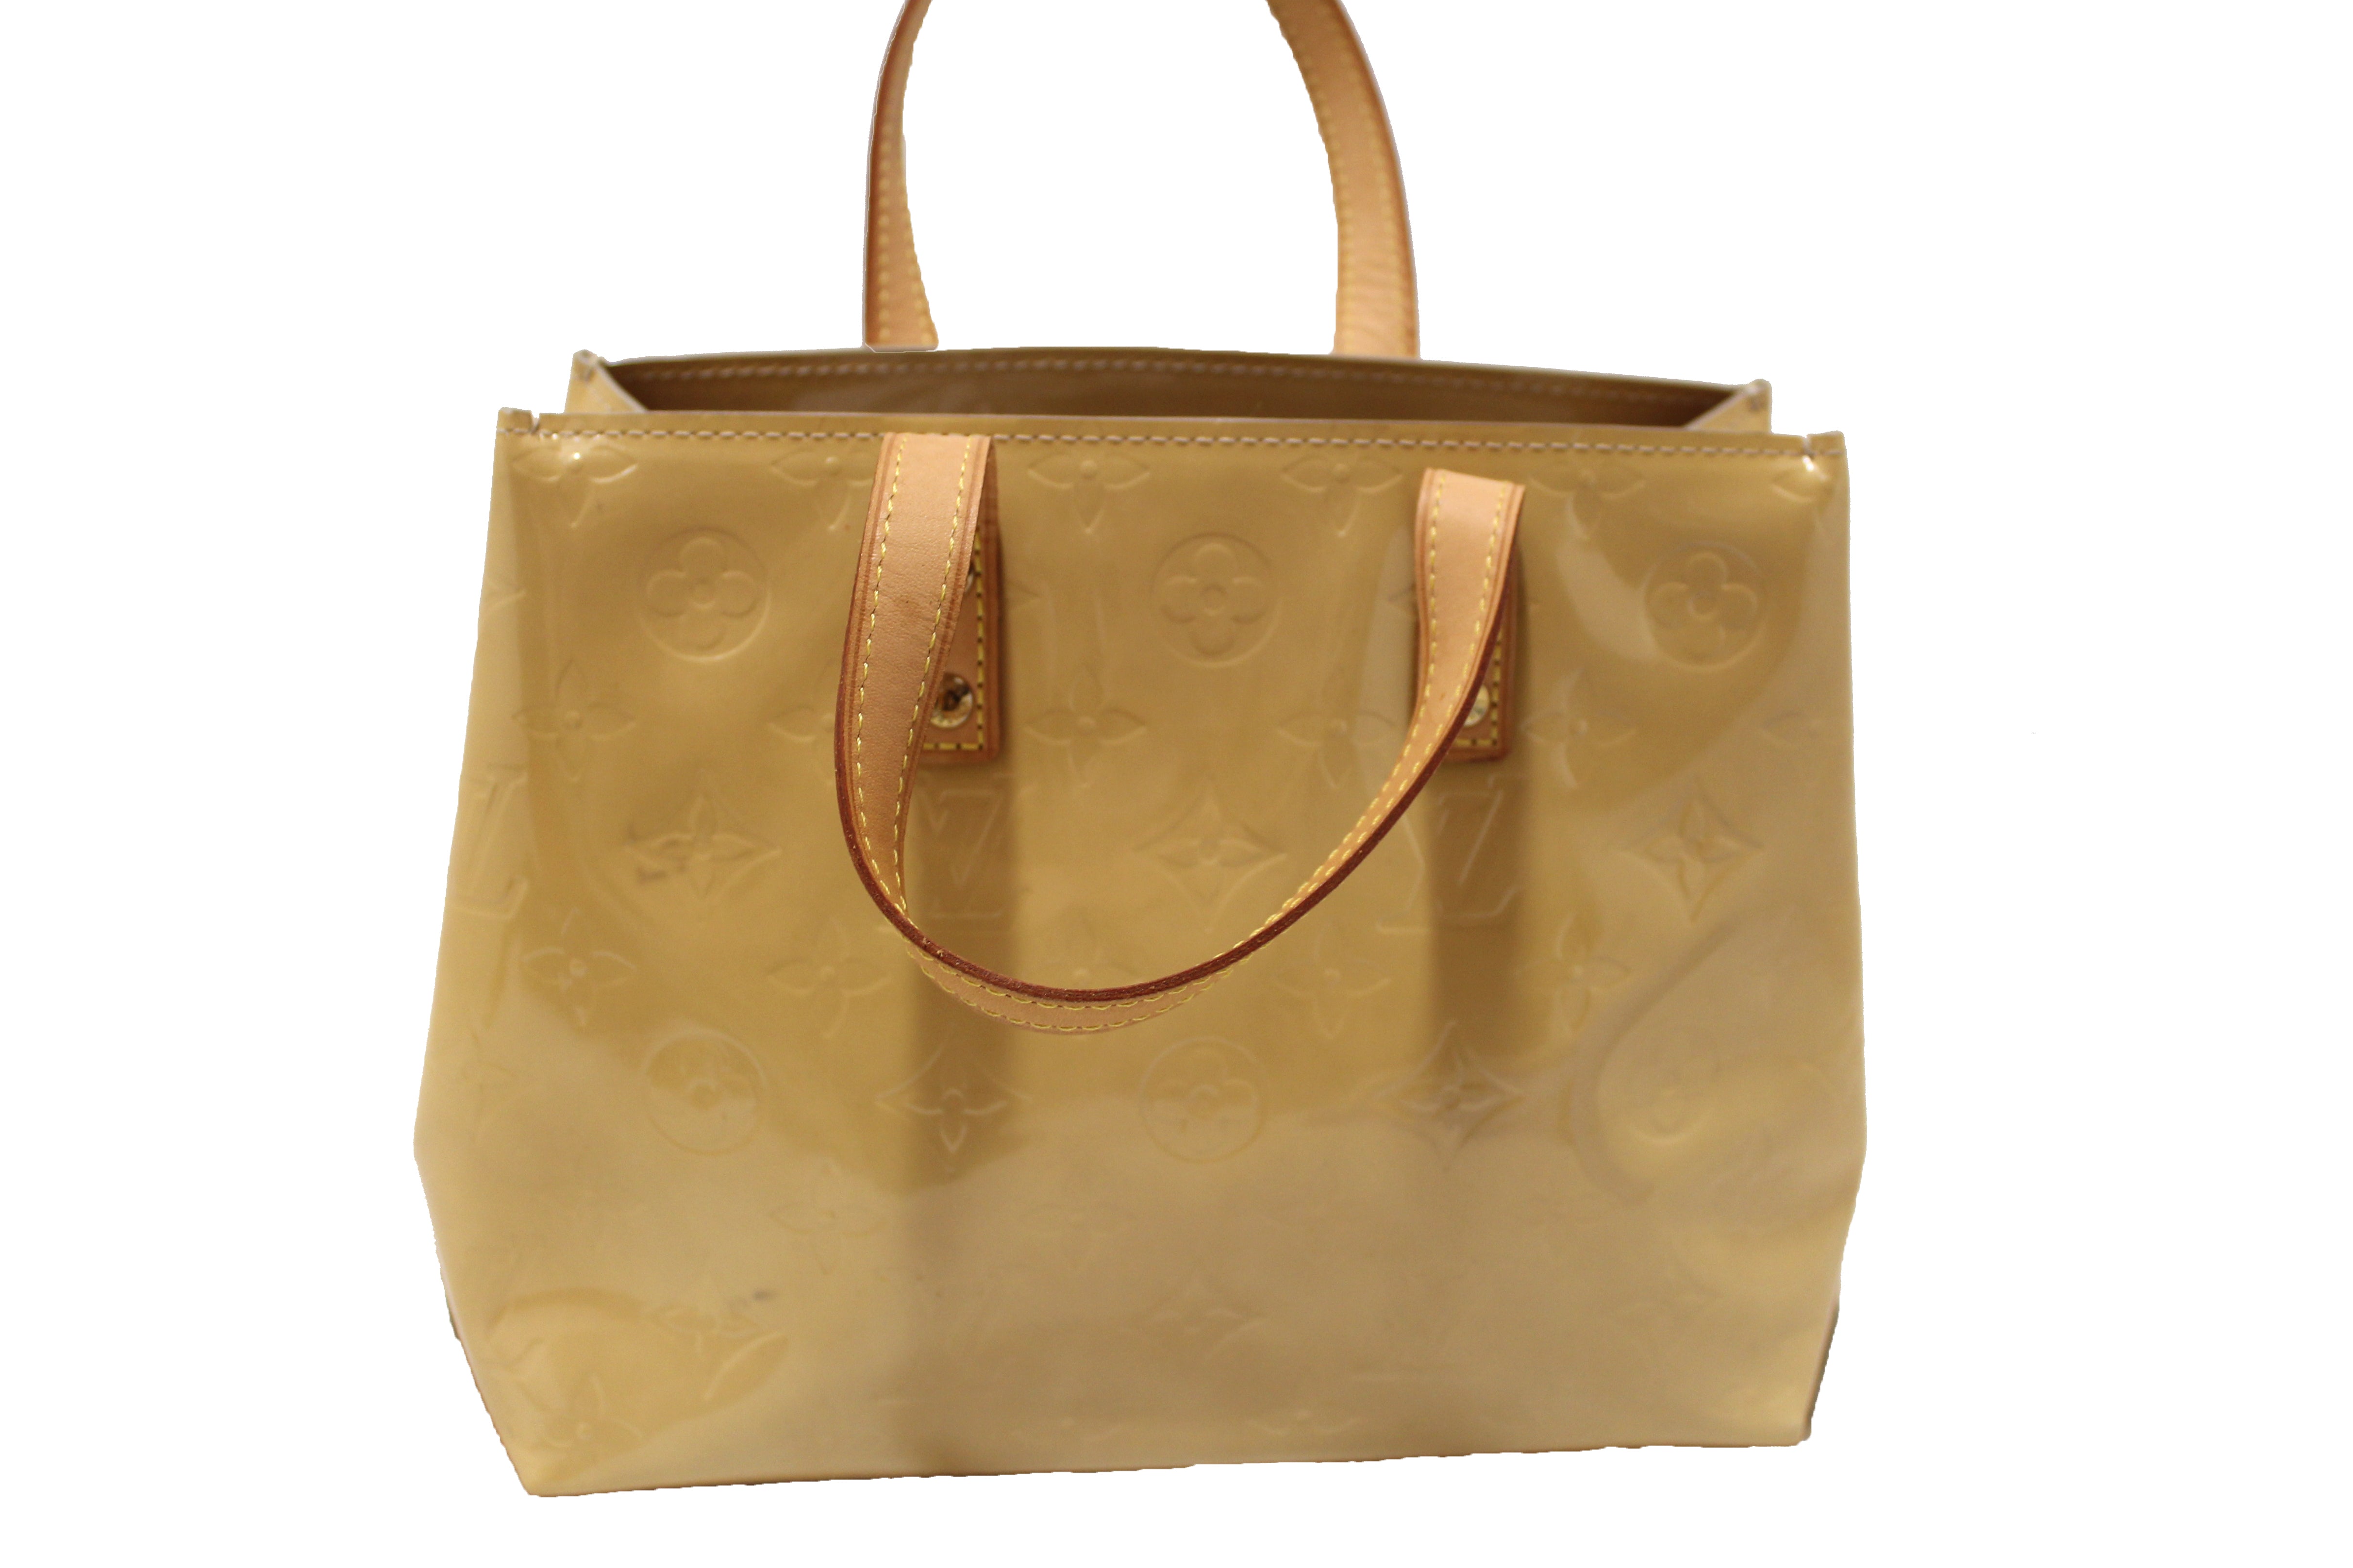 Authentic Louis Vuitton Beige Monogram Vernis Patent Leather Reade PM Bag